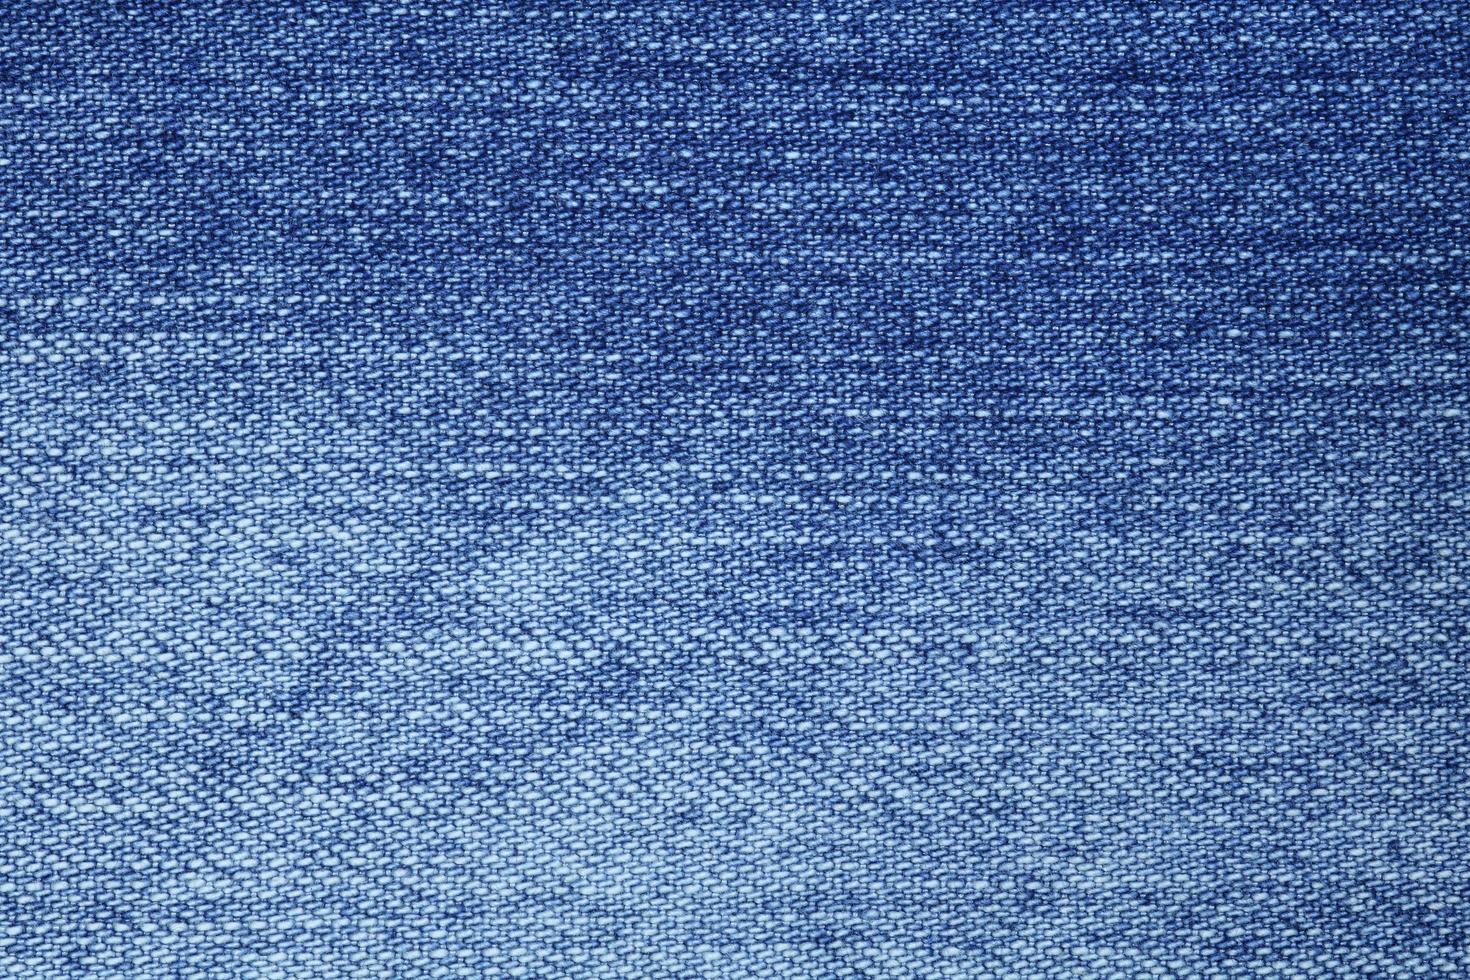 struttura del denim blue jean foto